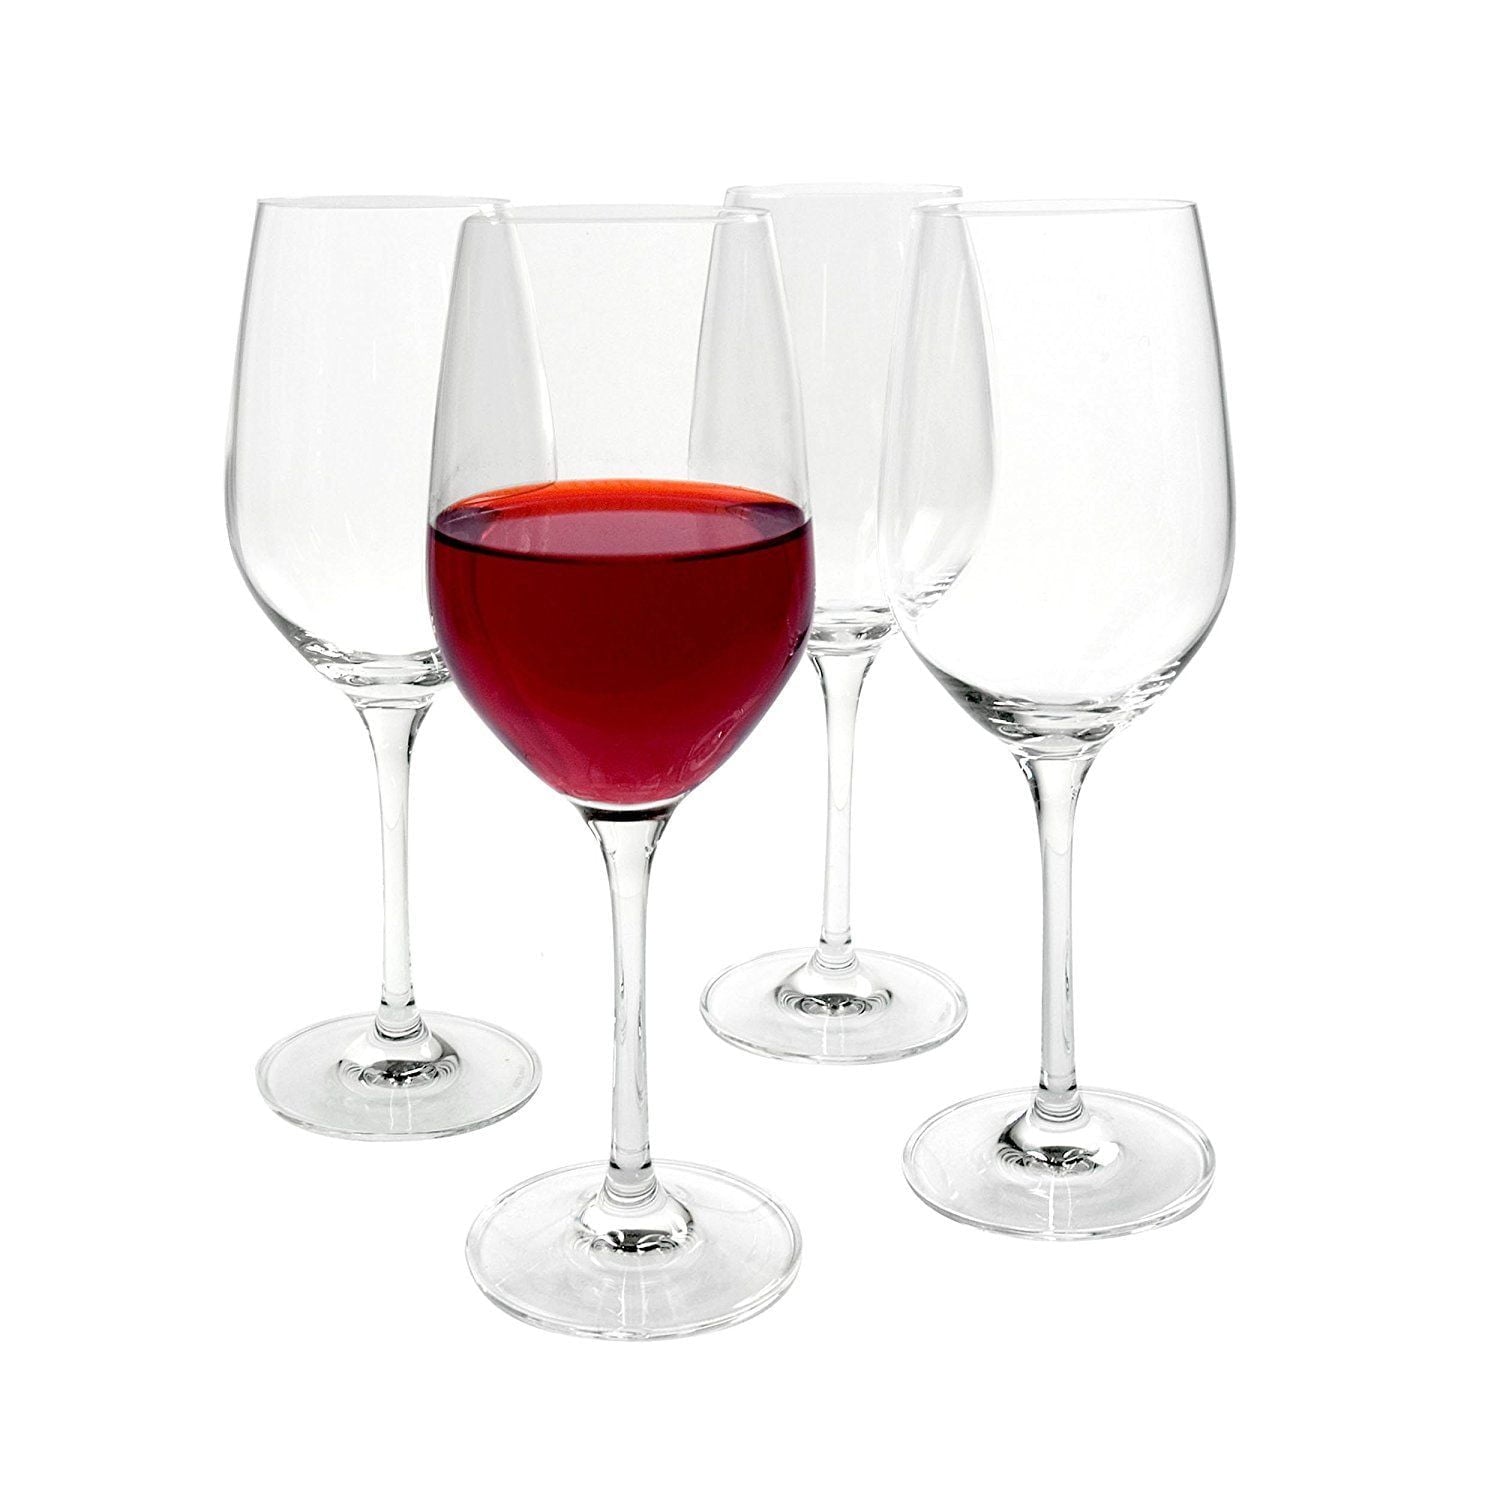 Artland Inc. Veritas Chianti Wine Glasses - Set of 4